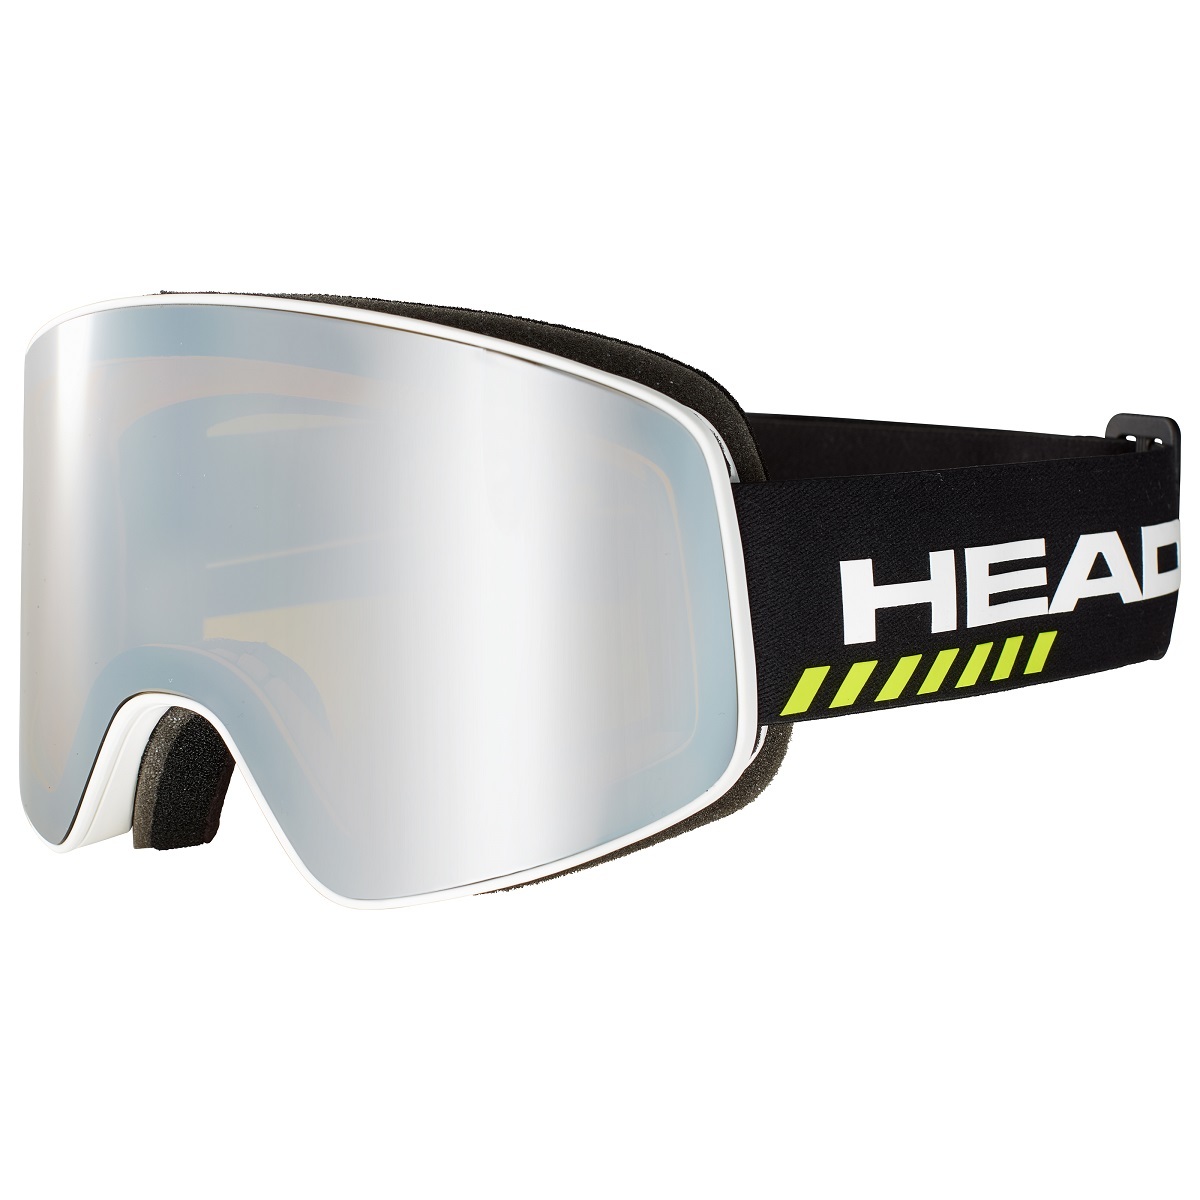 Head Horizon Race + SpareLens